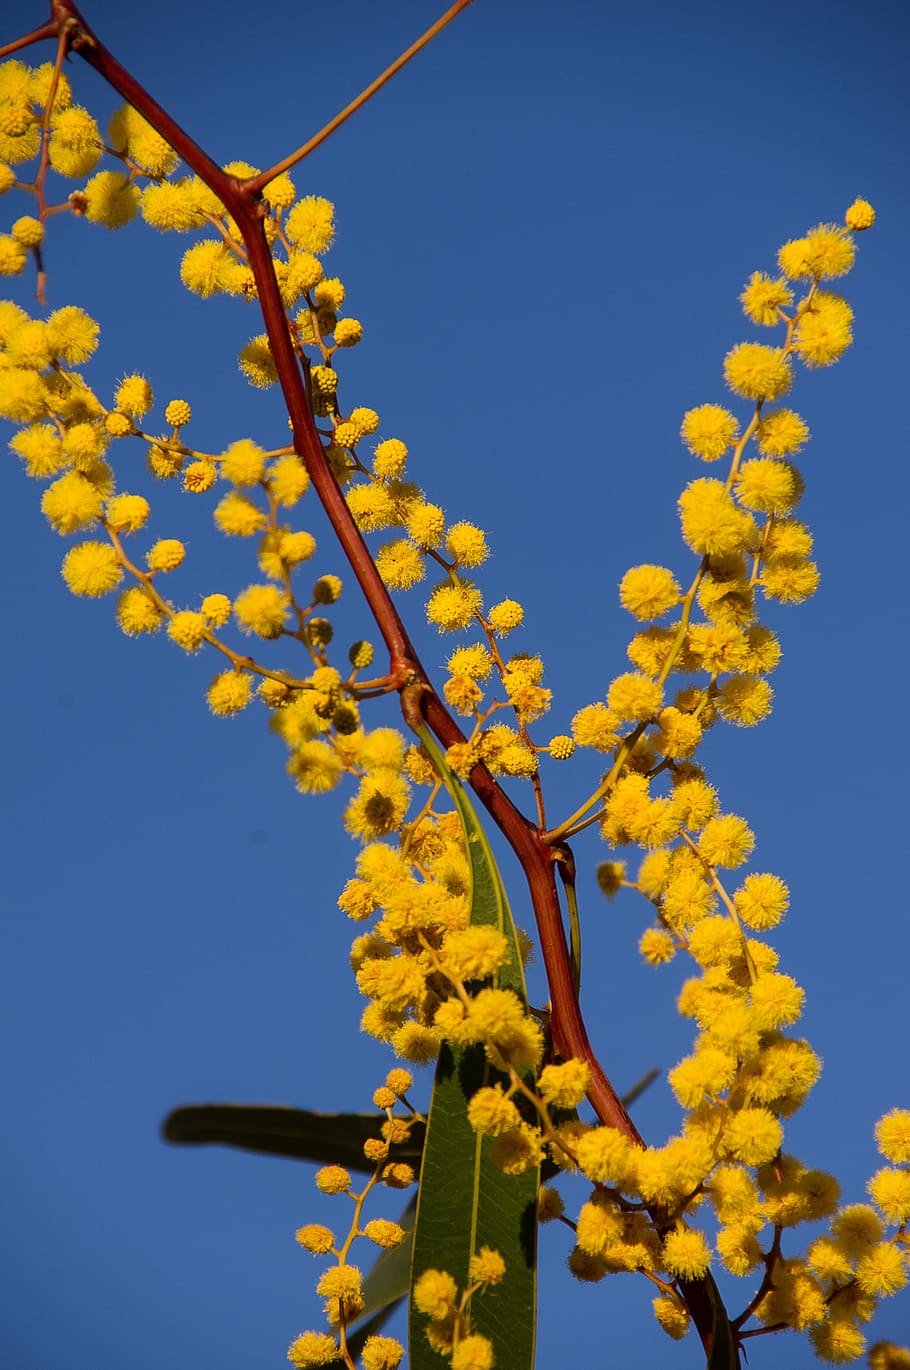 acacia, wattle, flowers, yellow, australian native, many, blue sky, sky, plant, growth